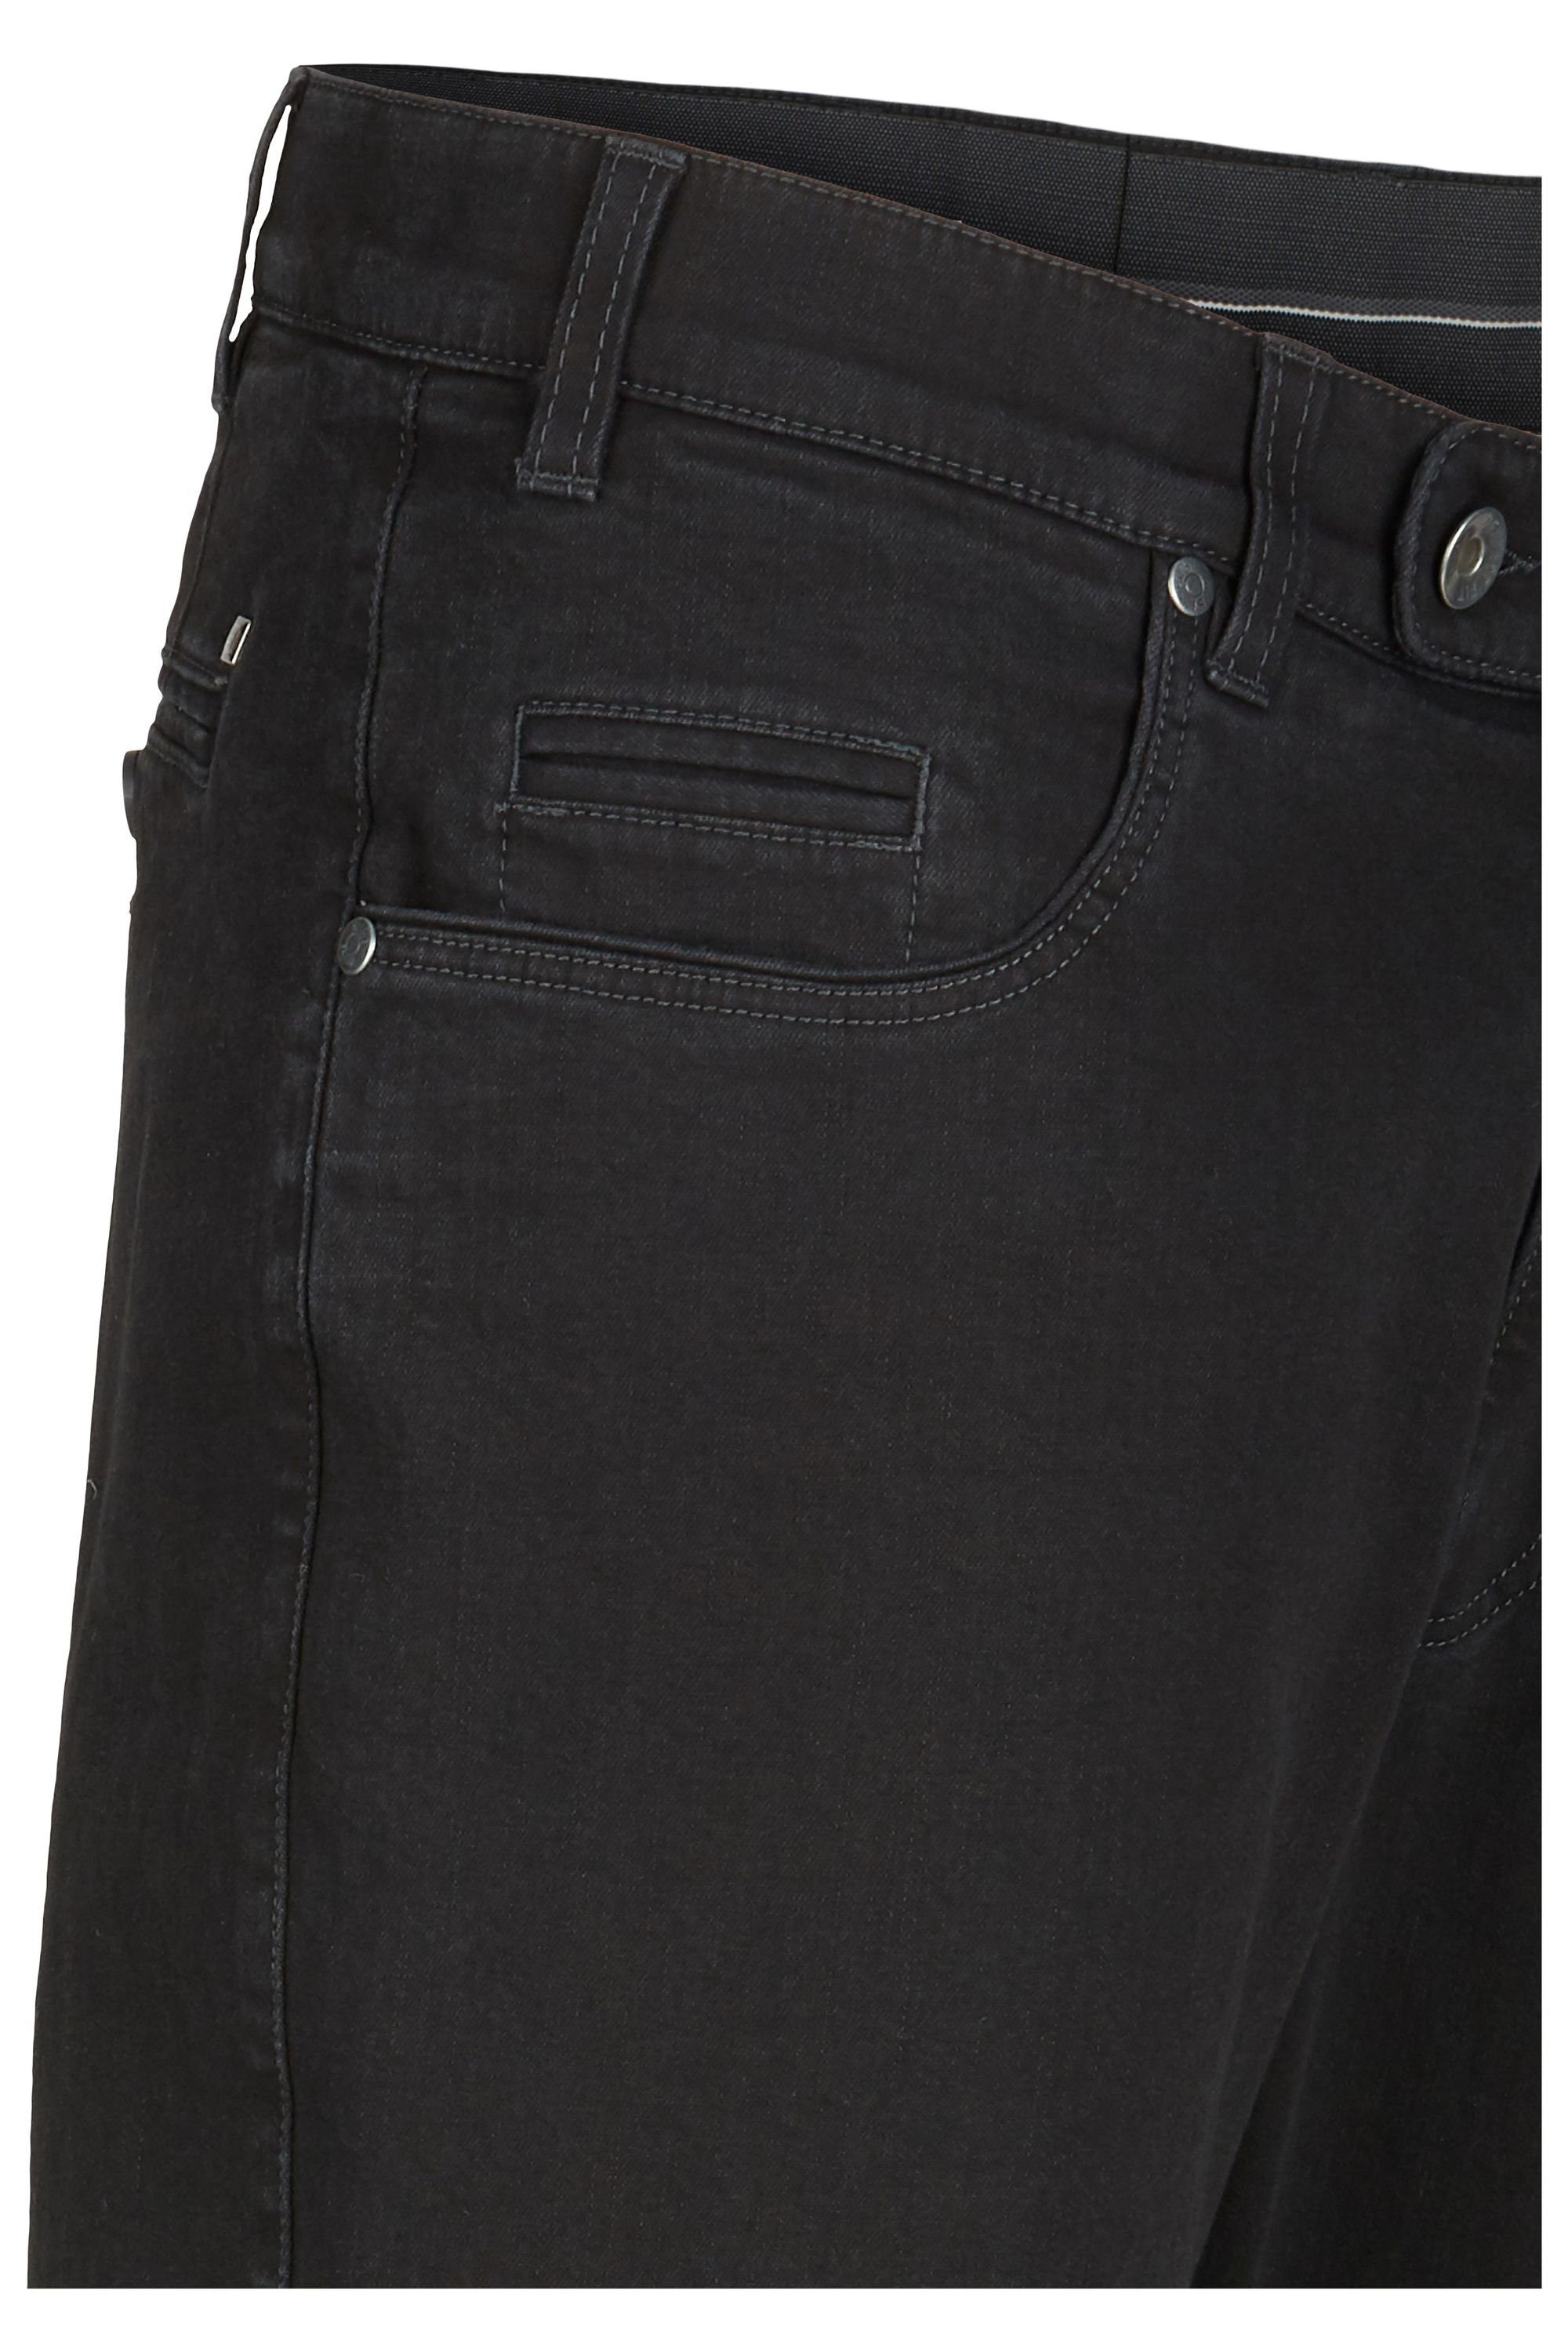 (50) Bequeme Jeans aubi Jeans 577 Perfect Stretch black Hose Fit aubi: Modell Herren